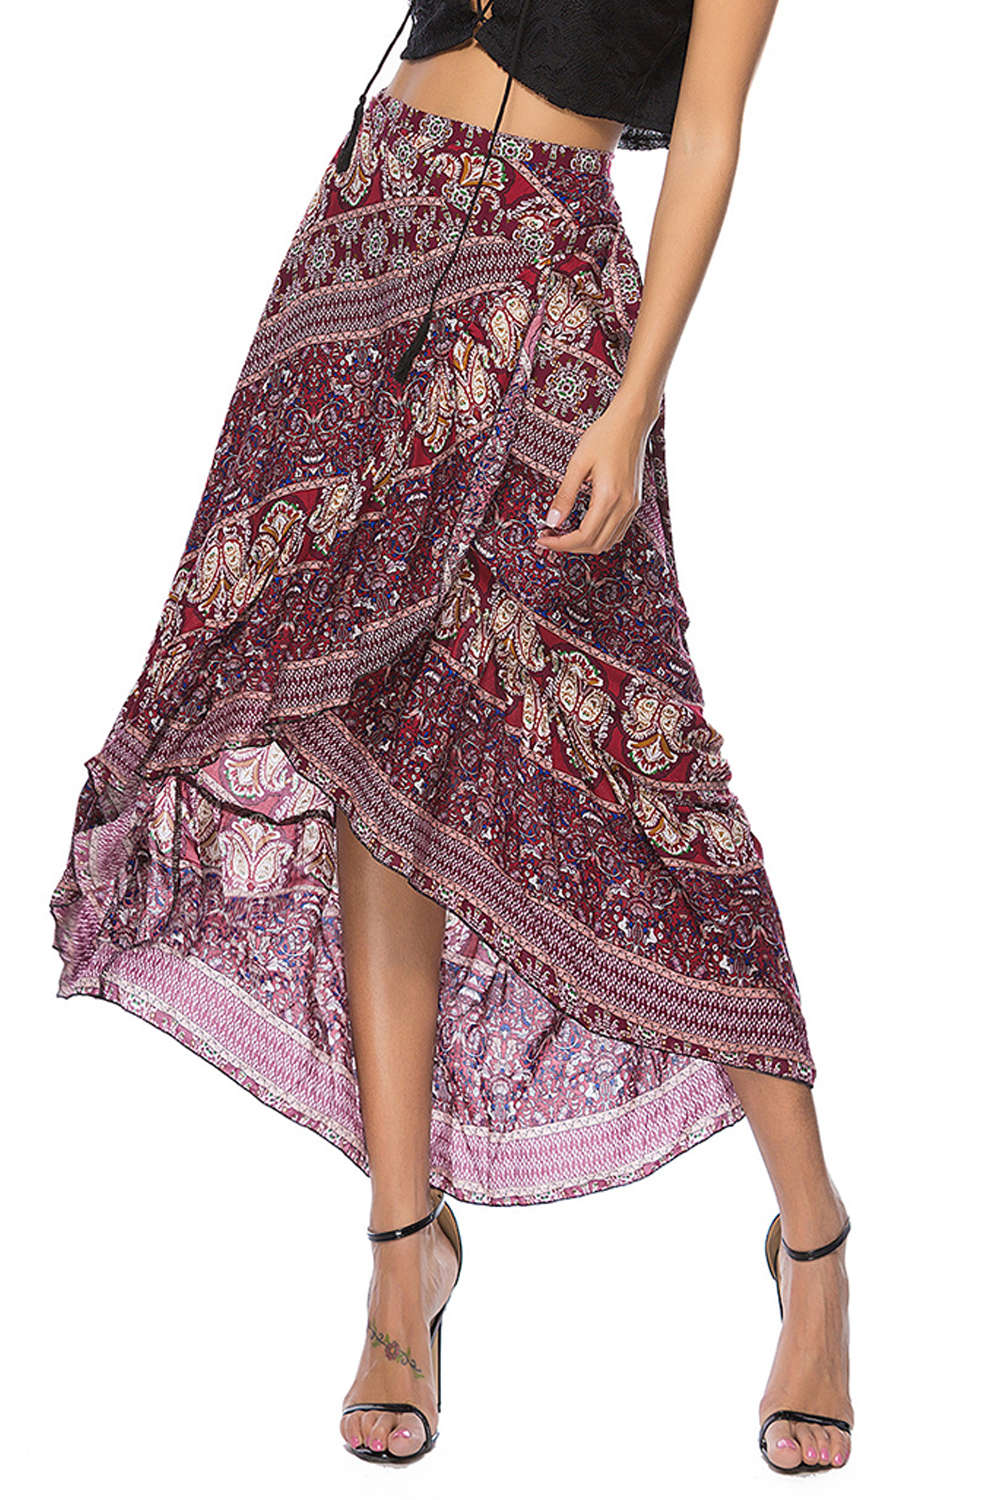 Iyasson Womens Bohemian Faux Wrap Skirt